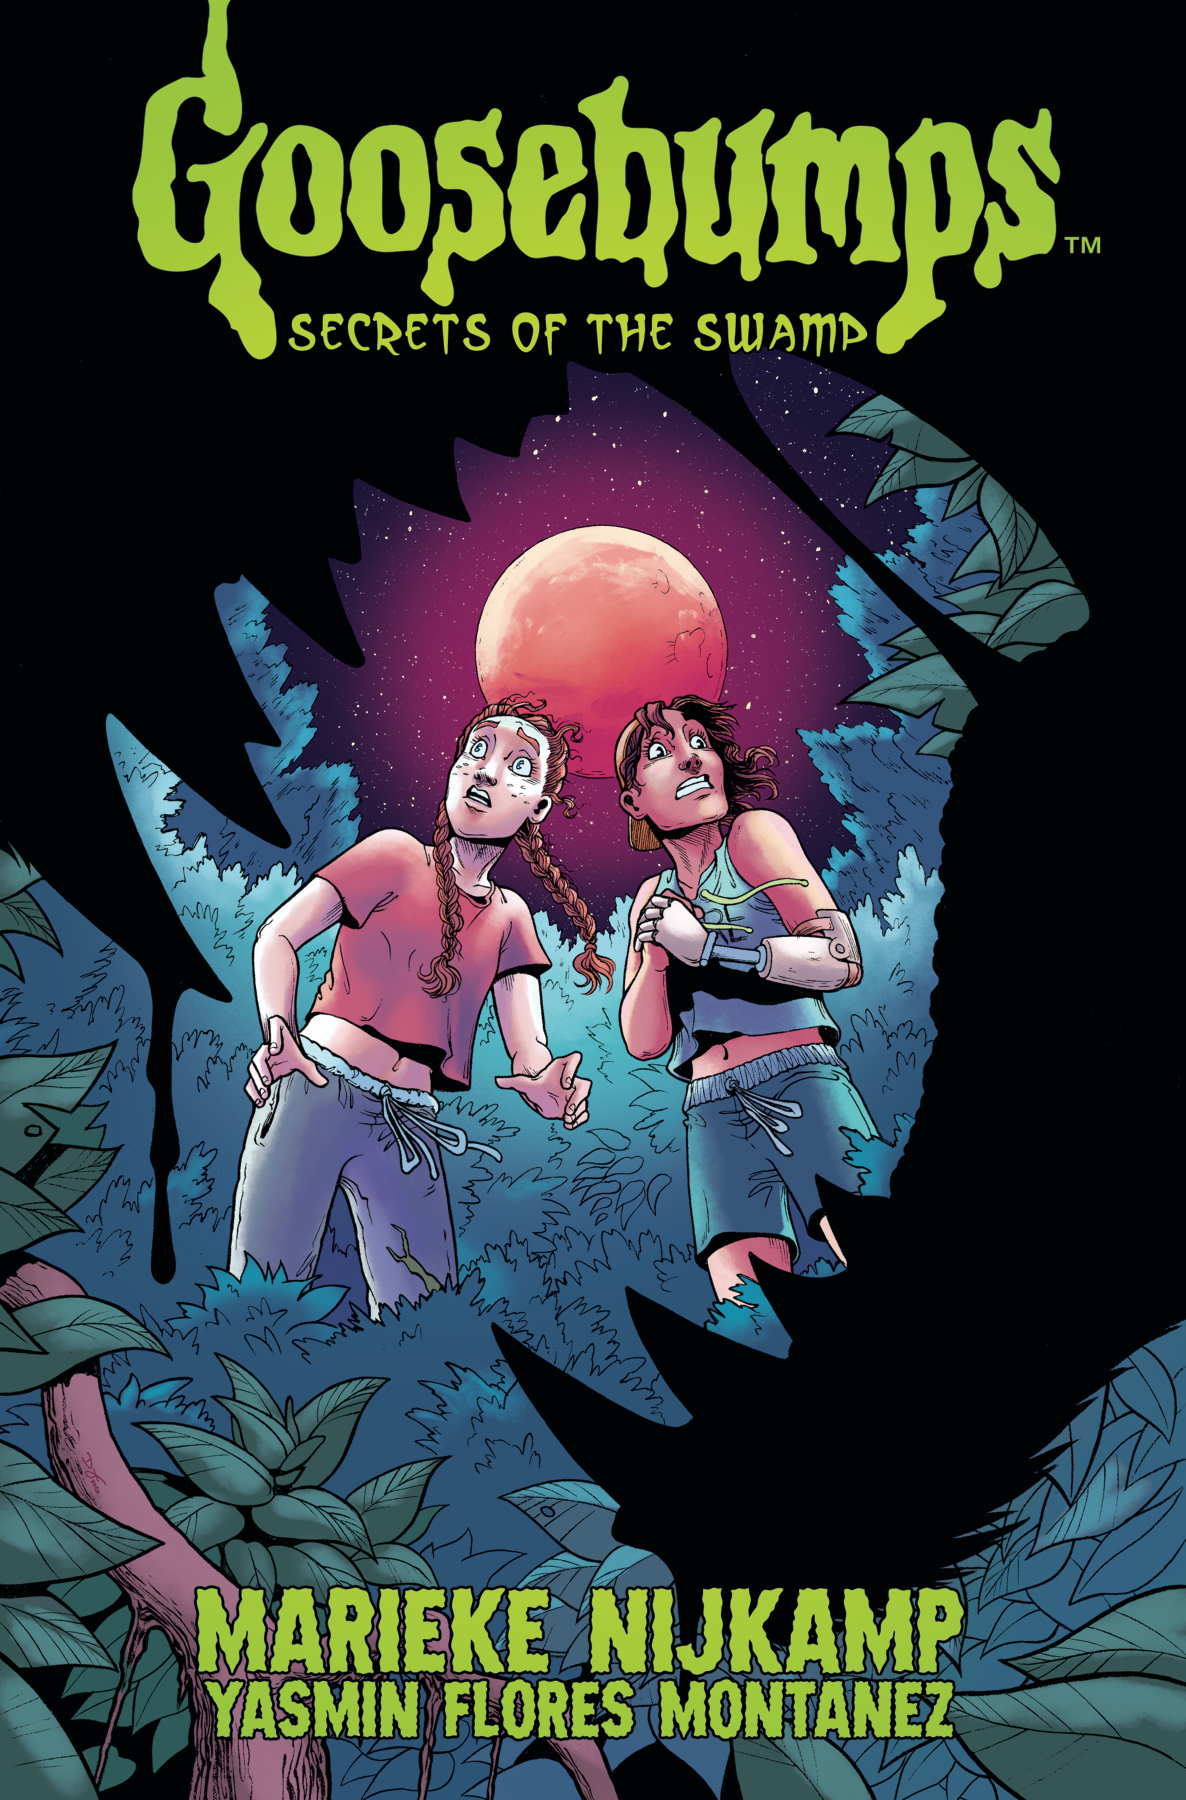 Goosebumps Secret of the Swamp Graphic Novel